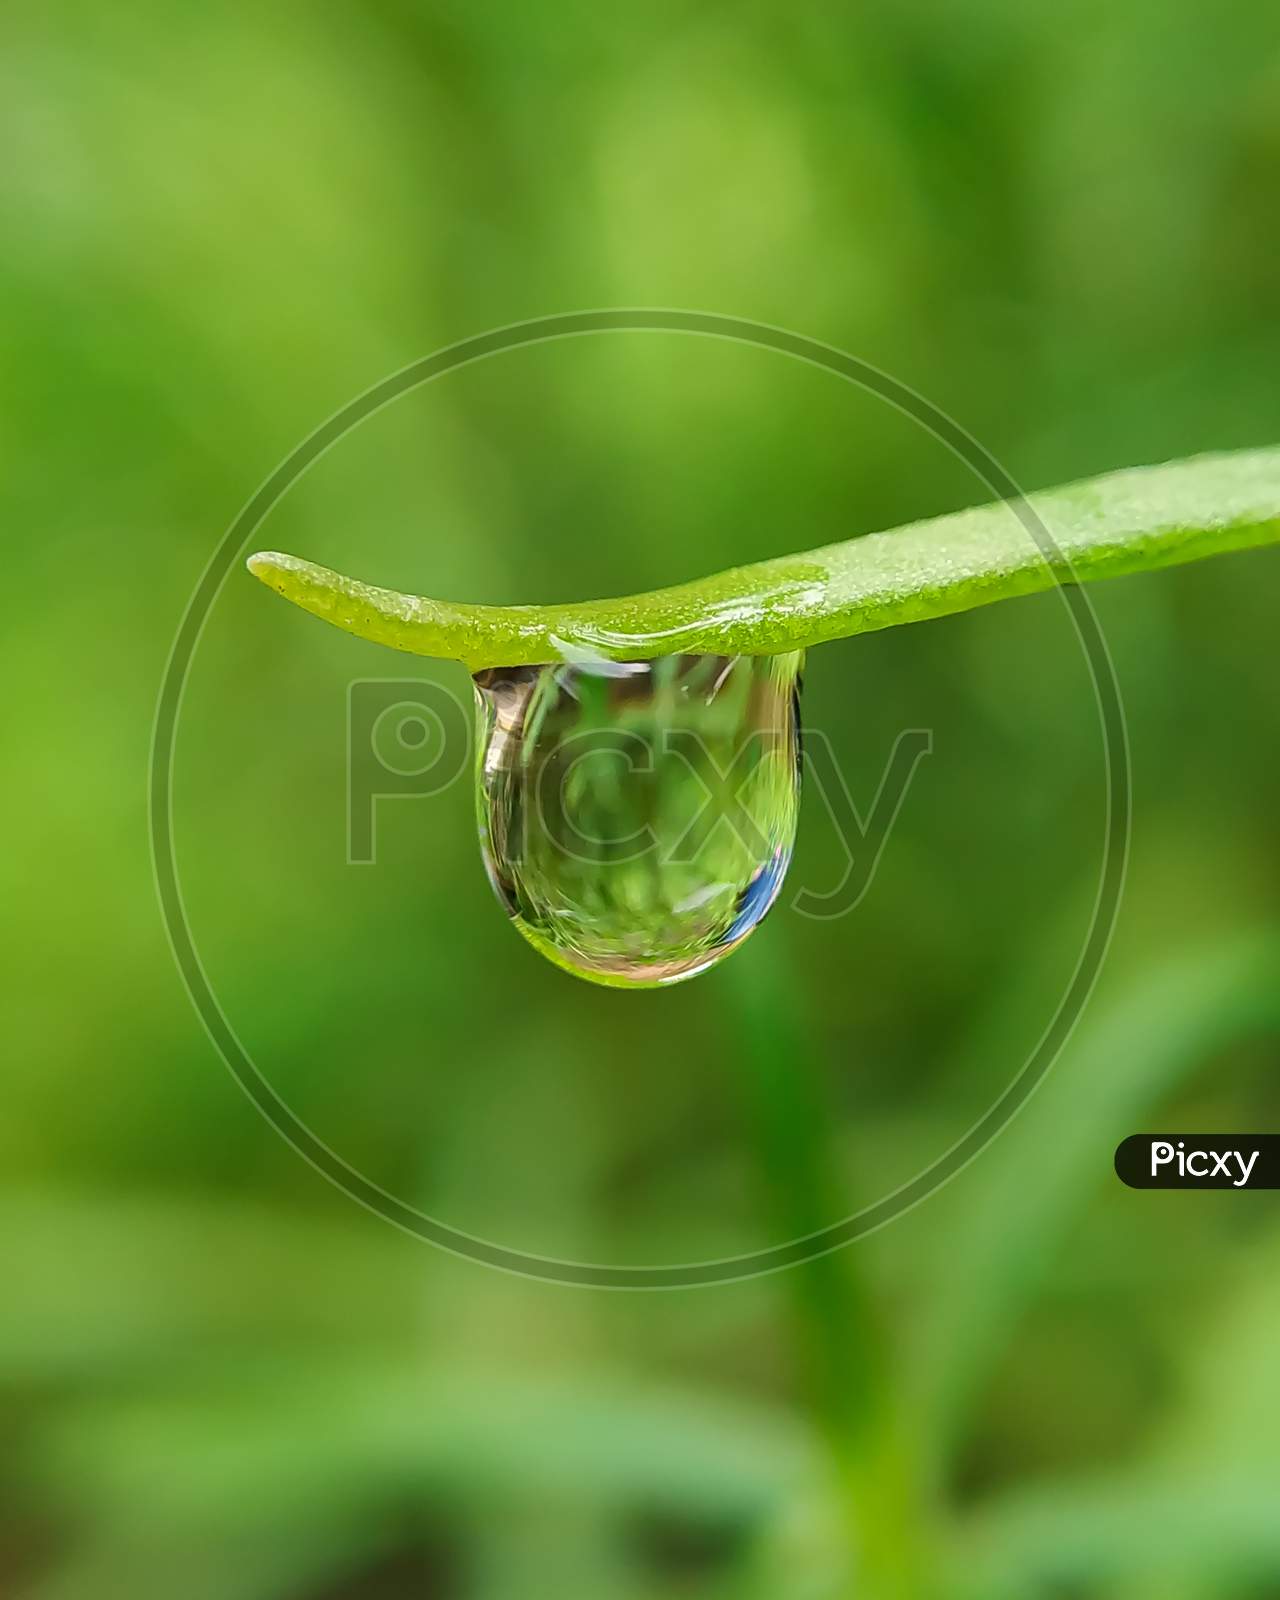 Rain Drop Hanging on the leaf tip